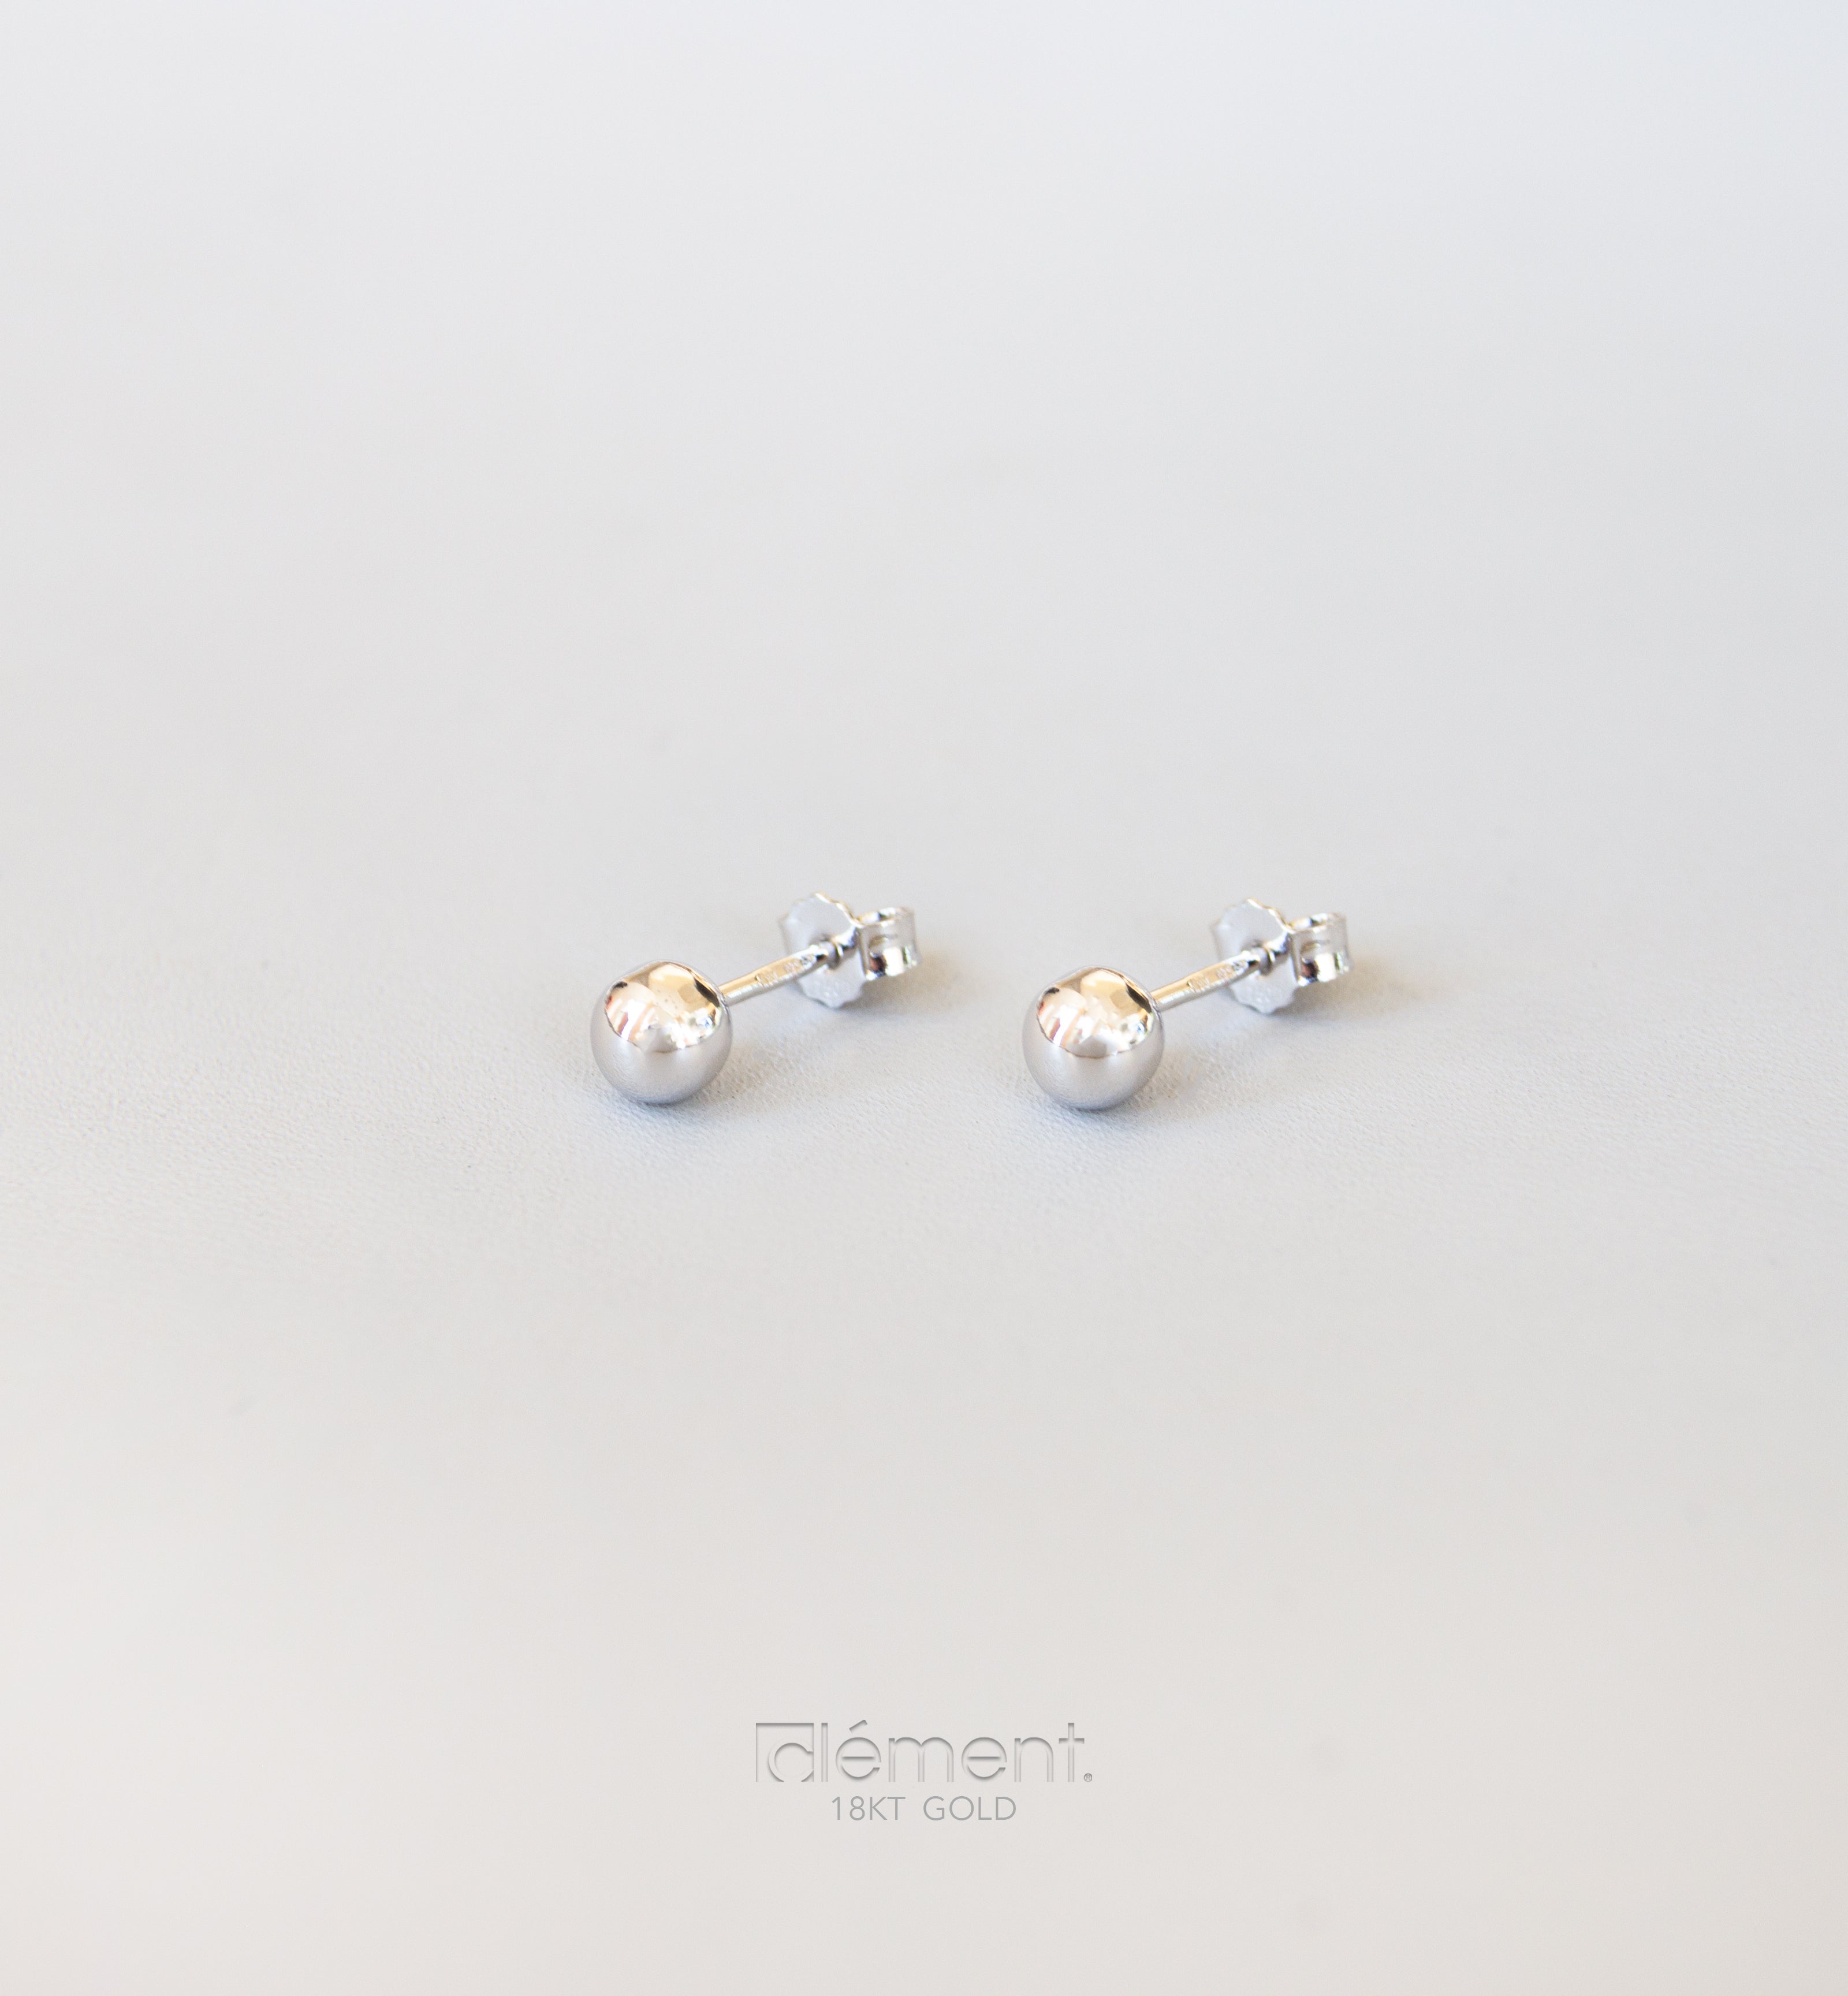 18ct White Gold Earrings